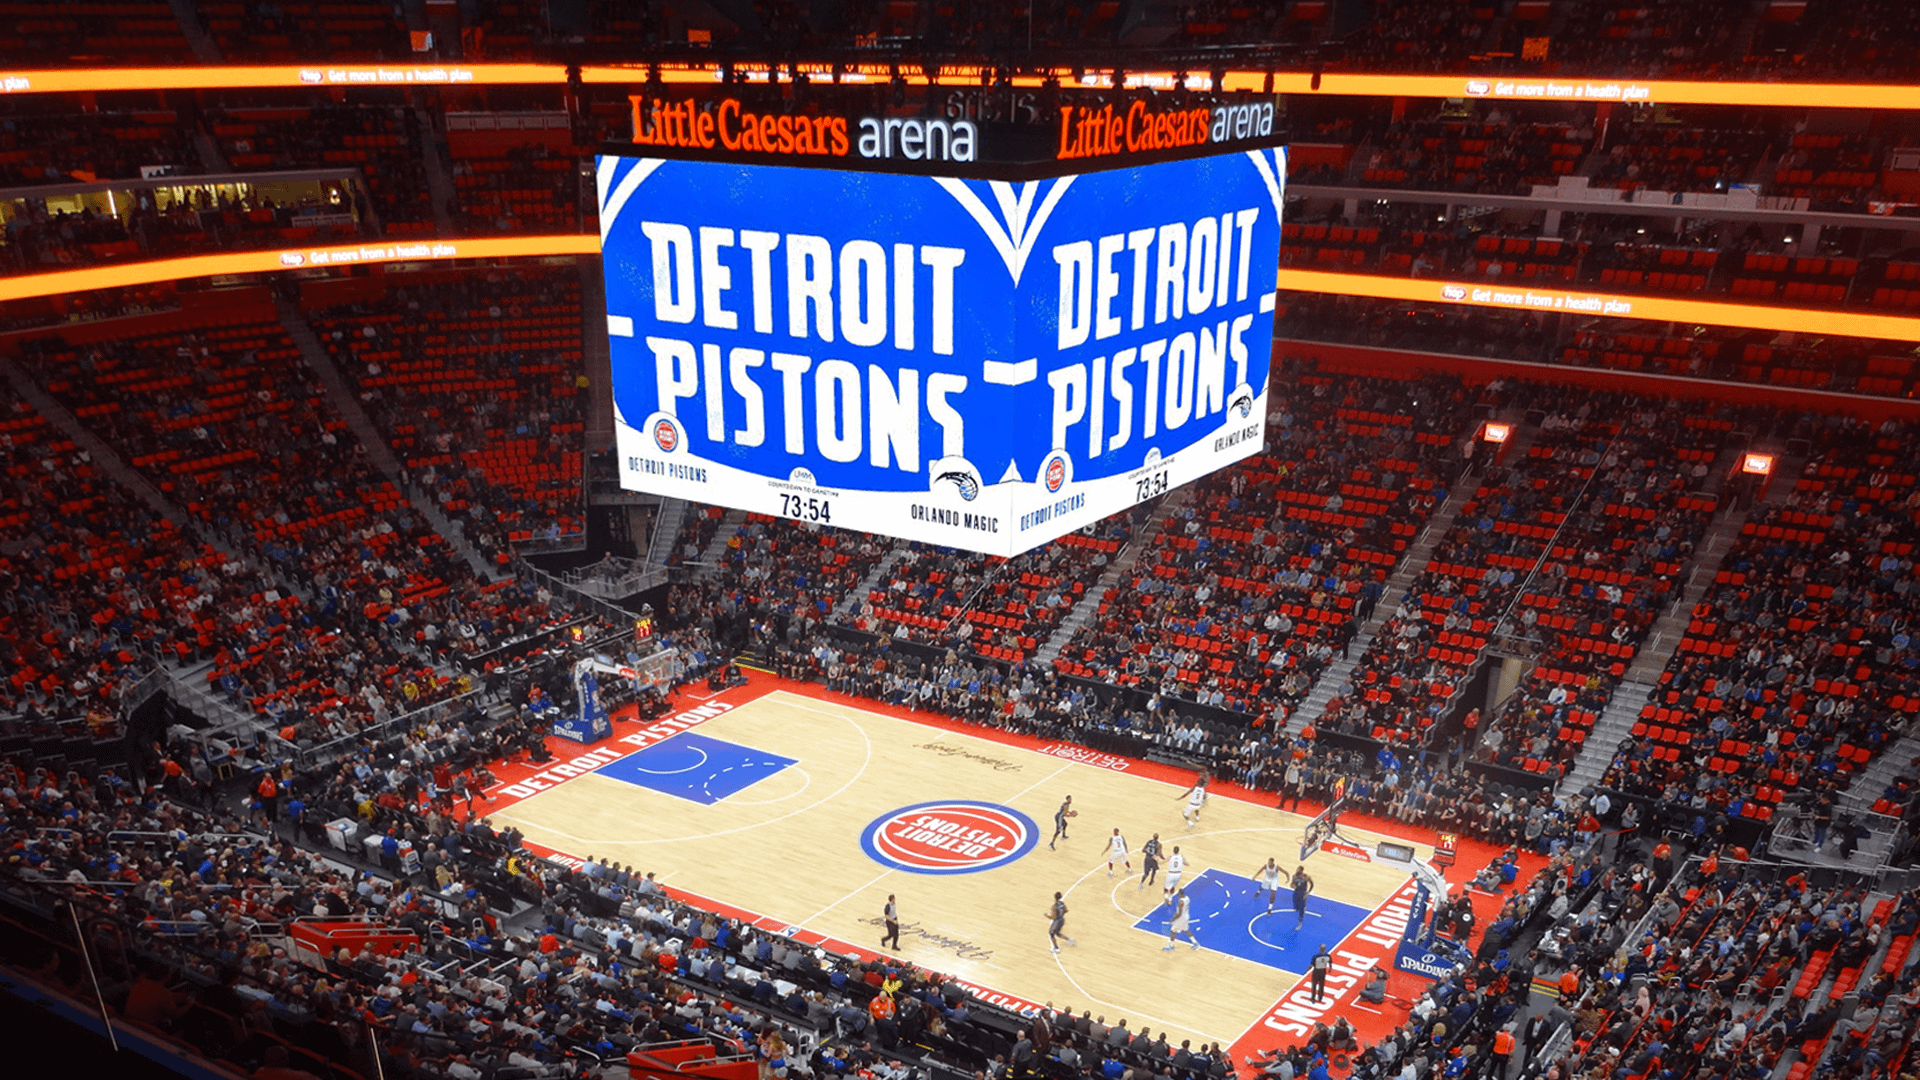 Detroit Pistons (NBA): Animación Gráfica de estadio.